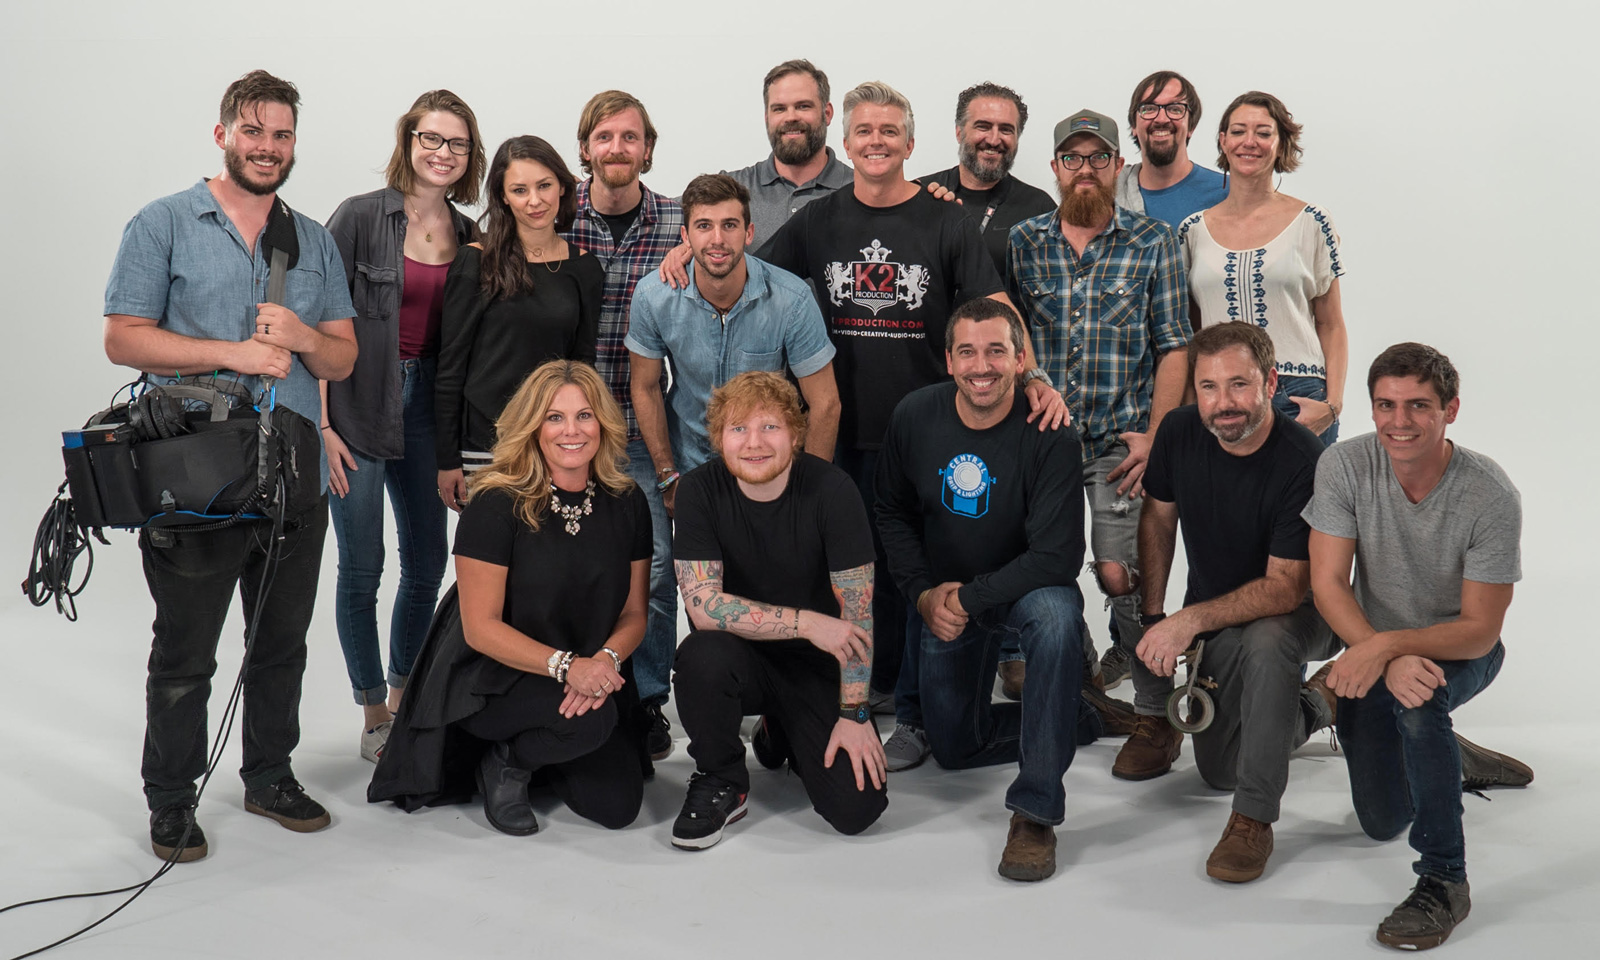 K2 team posing with Ed Sheeran after a shoot